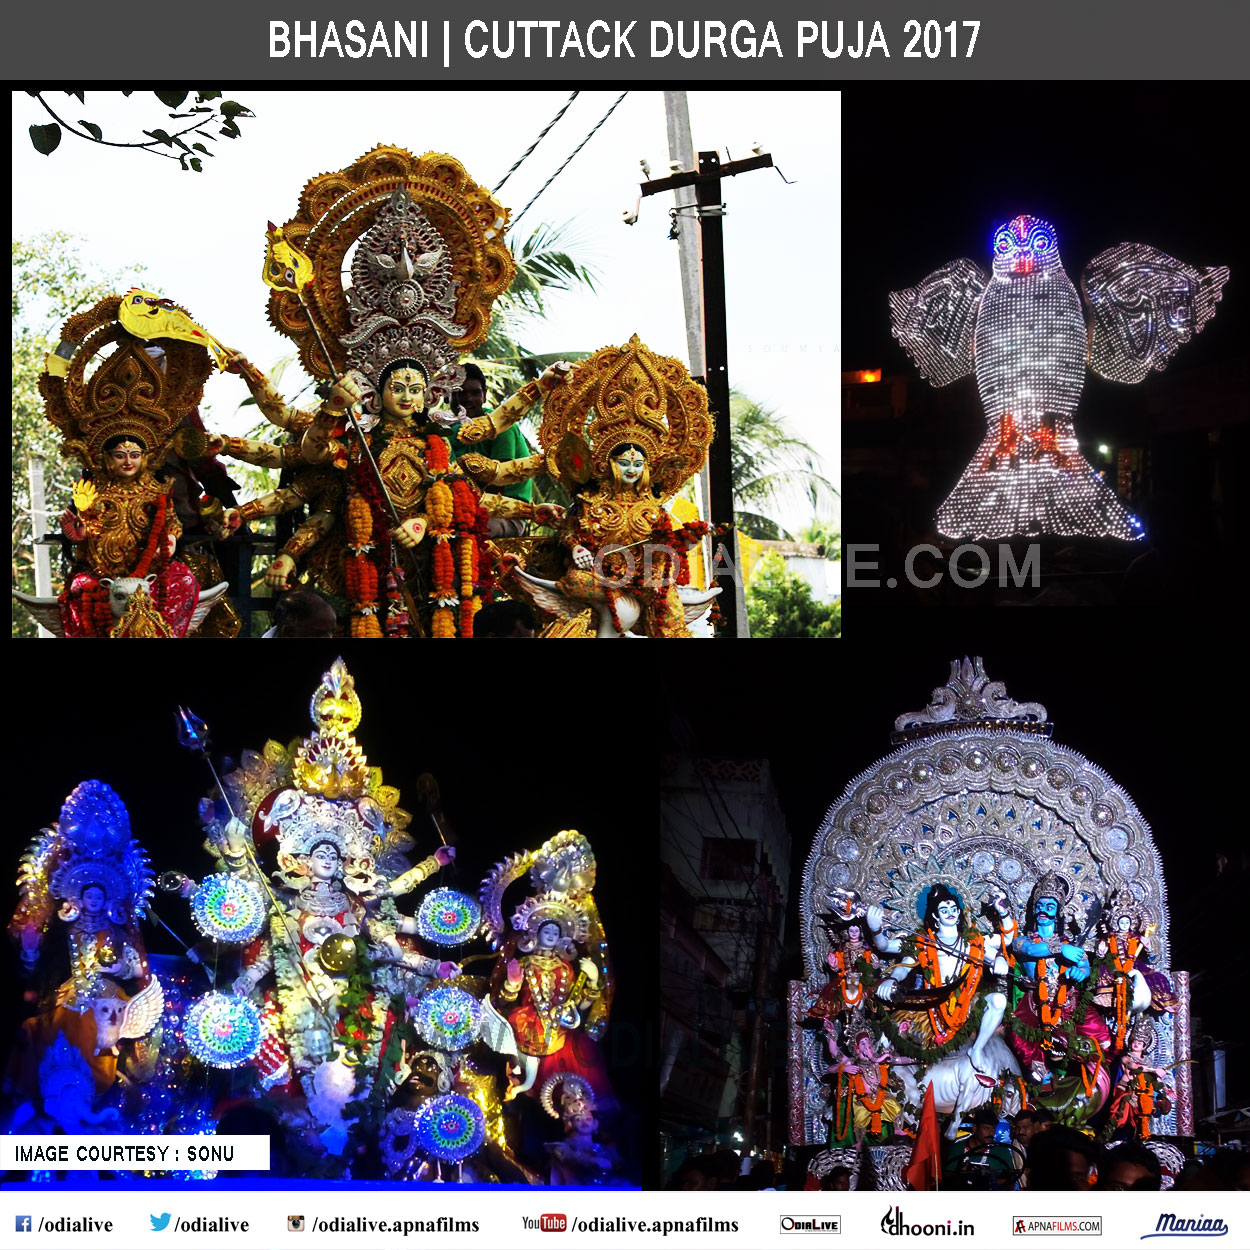 Cuttack Durga Puja Bhasani 